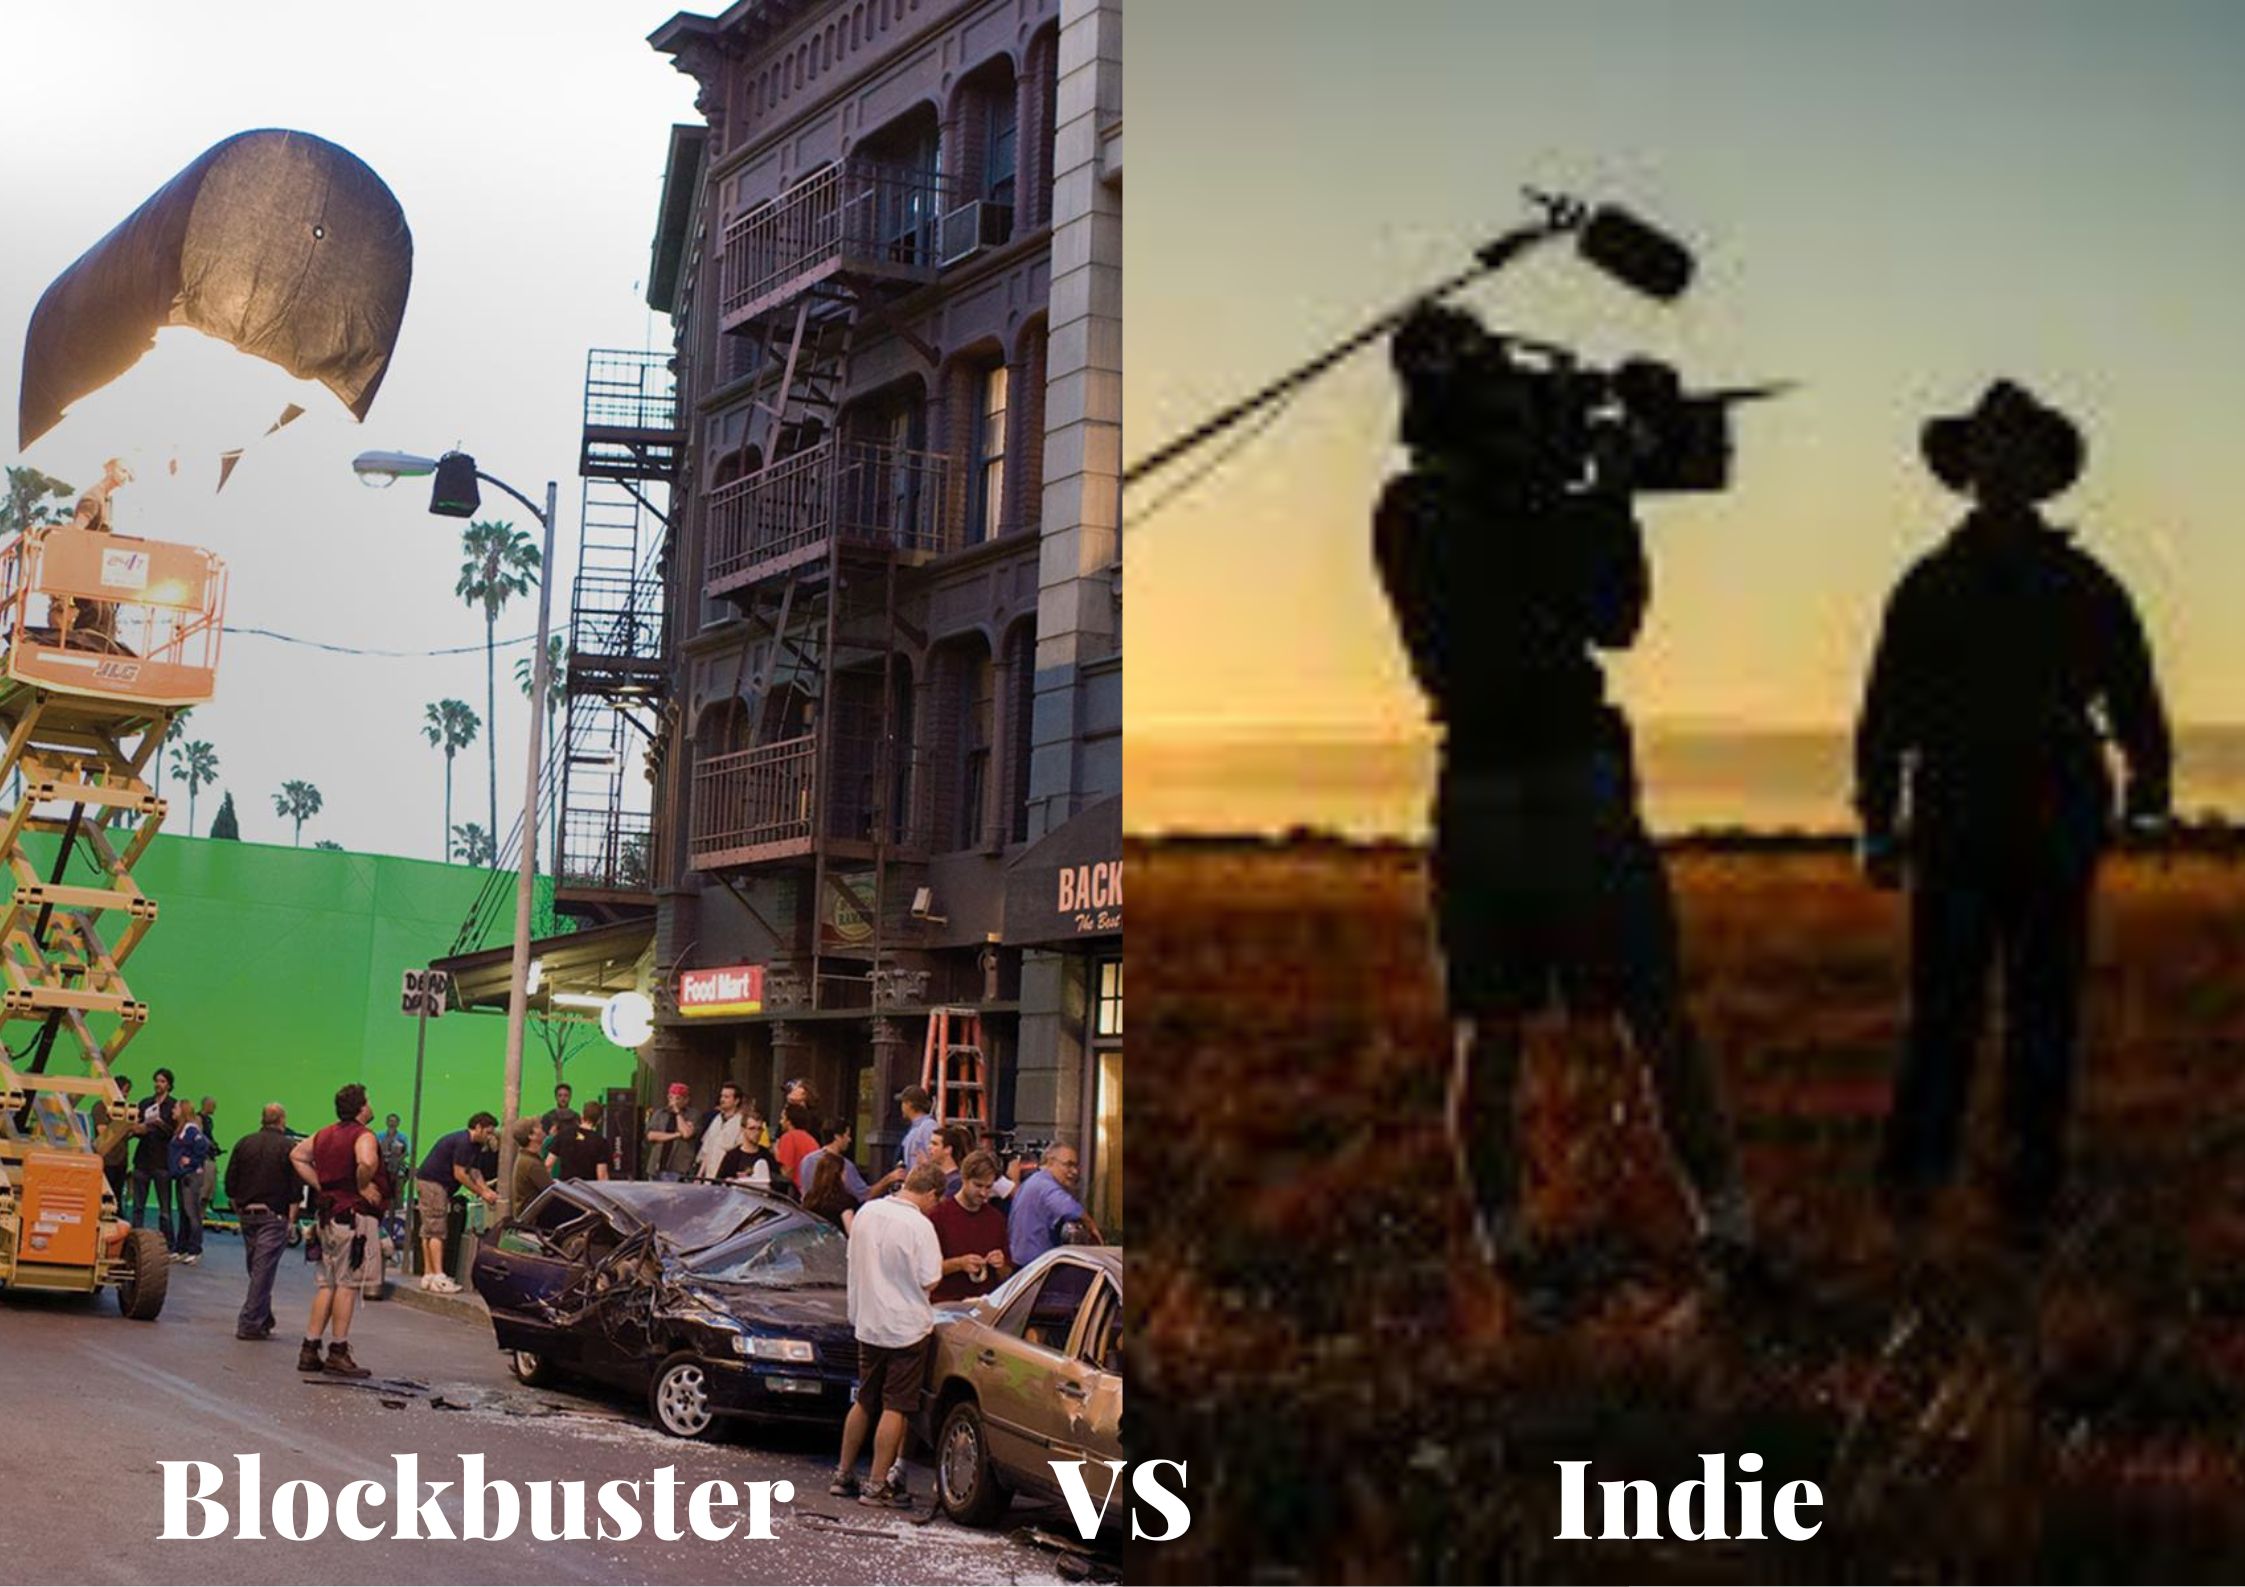 Blockbuster film set versus Indie film set